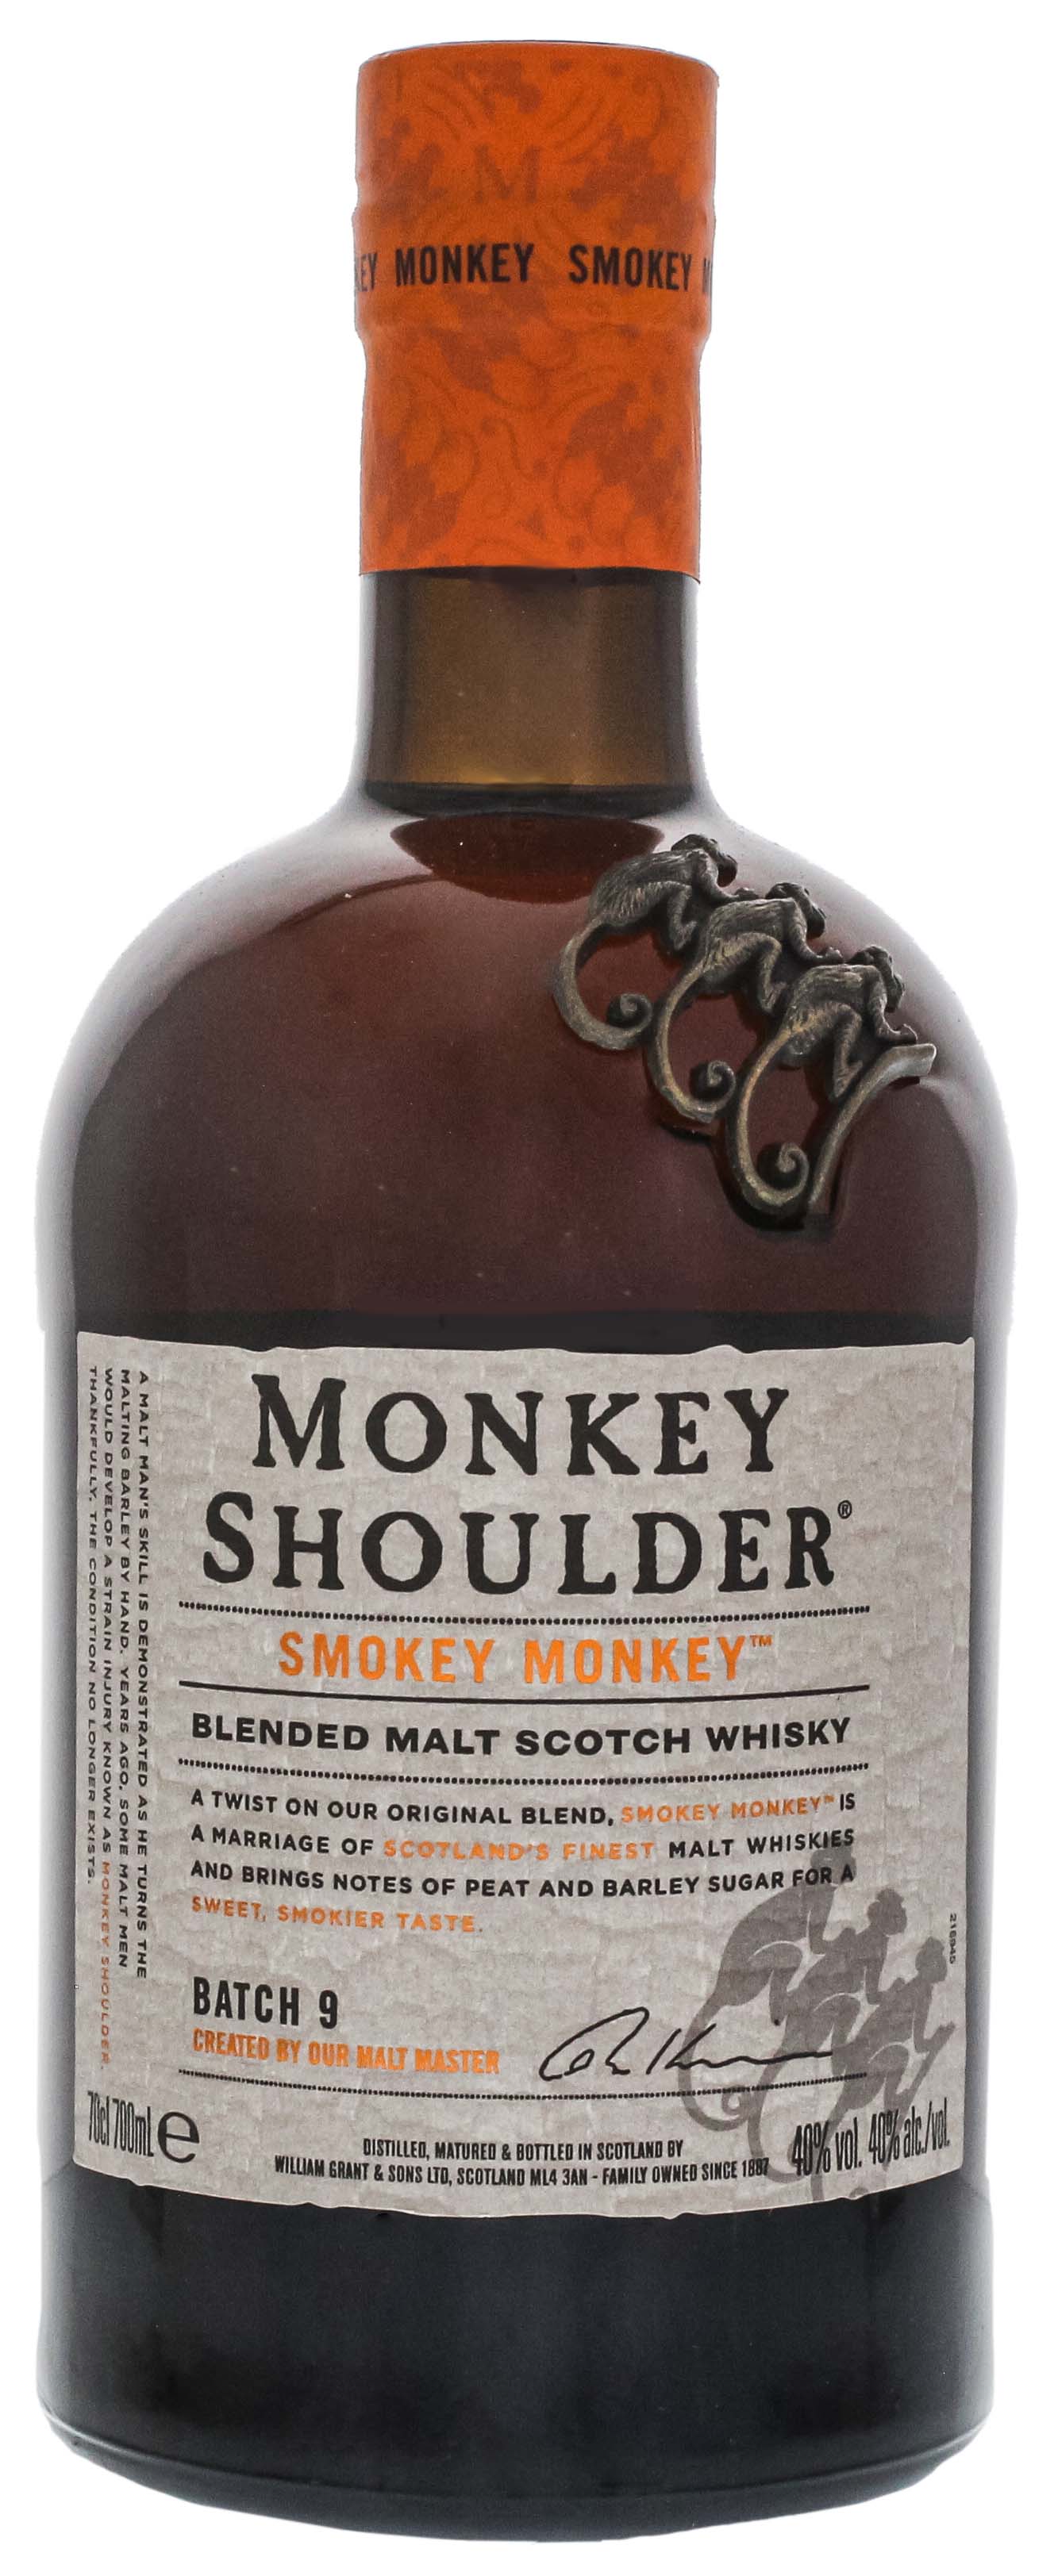 Манки шолдер 0.7. Виски манки шолдер 0.7. Monkey Shoulder - виски манки Шоулдер 0.7 литр. Smoky Monkey виски. Виски манки шолдер 0,70.